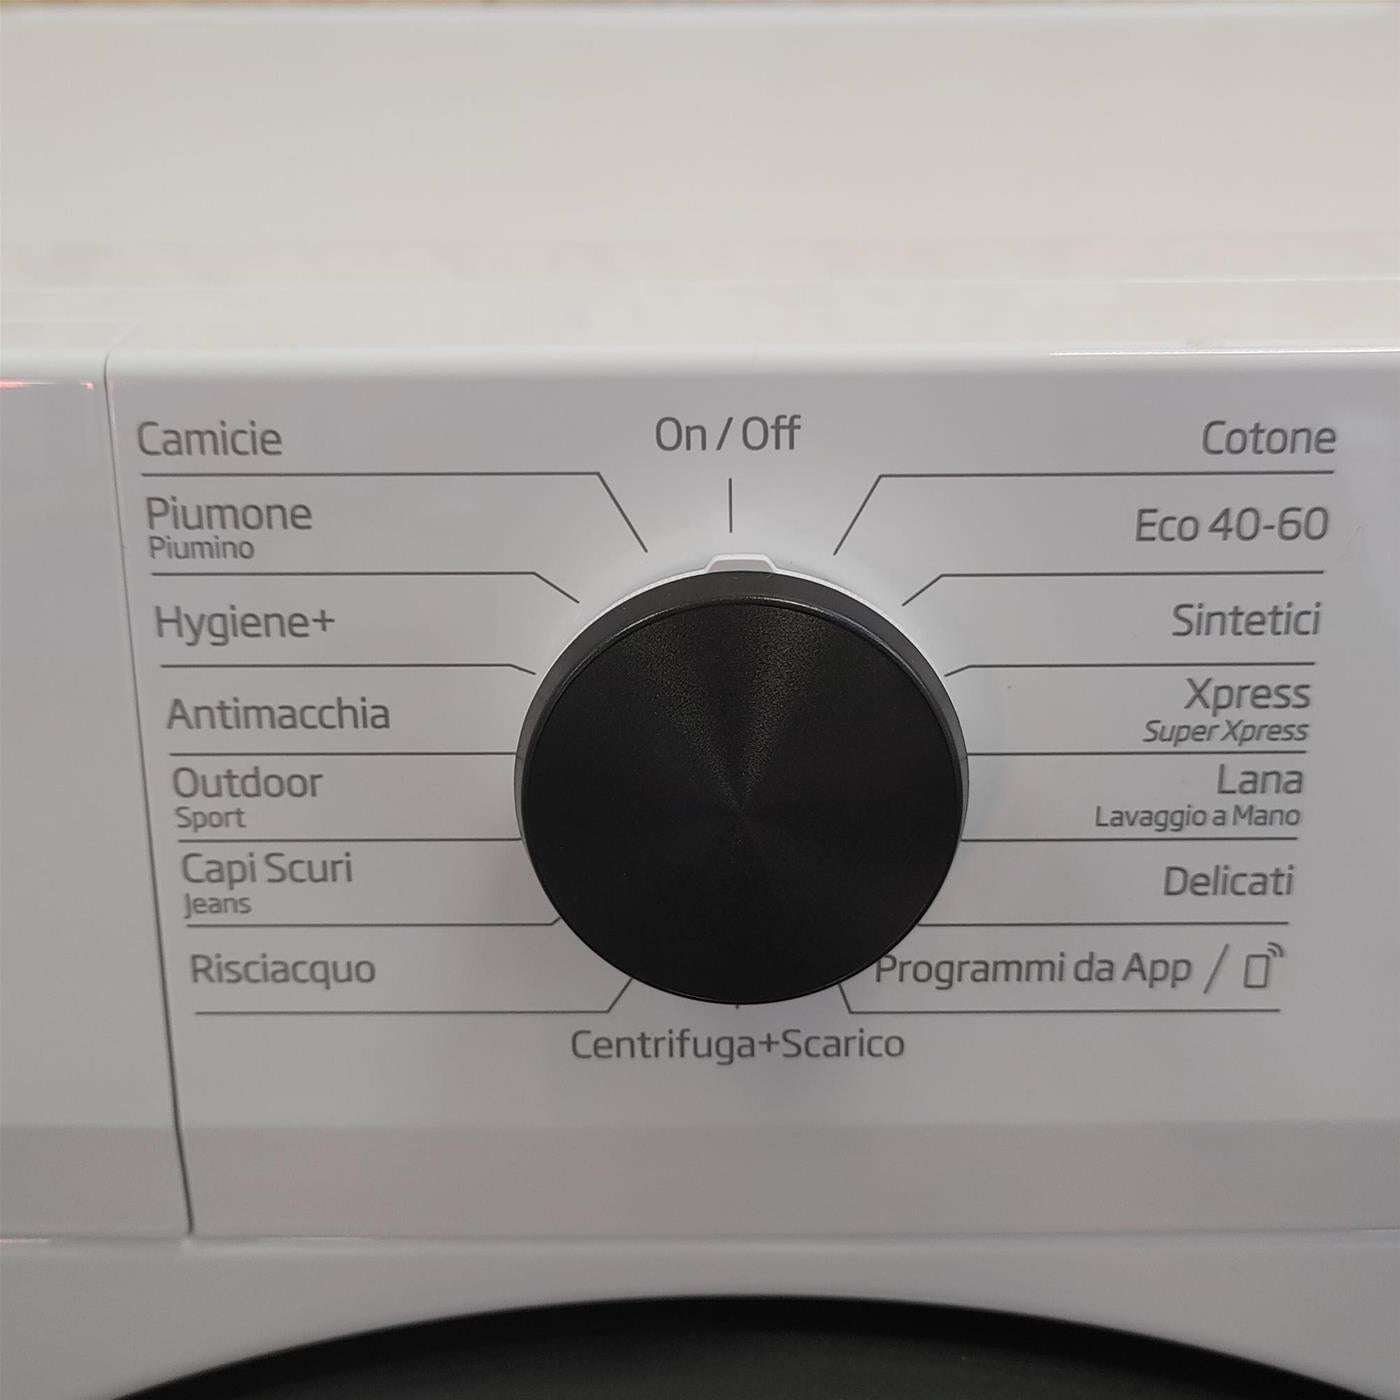 Beko WTX91486AI-IT lavatrice Caricamento frontale 9 kg 1400 Giri/min A Bianco